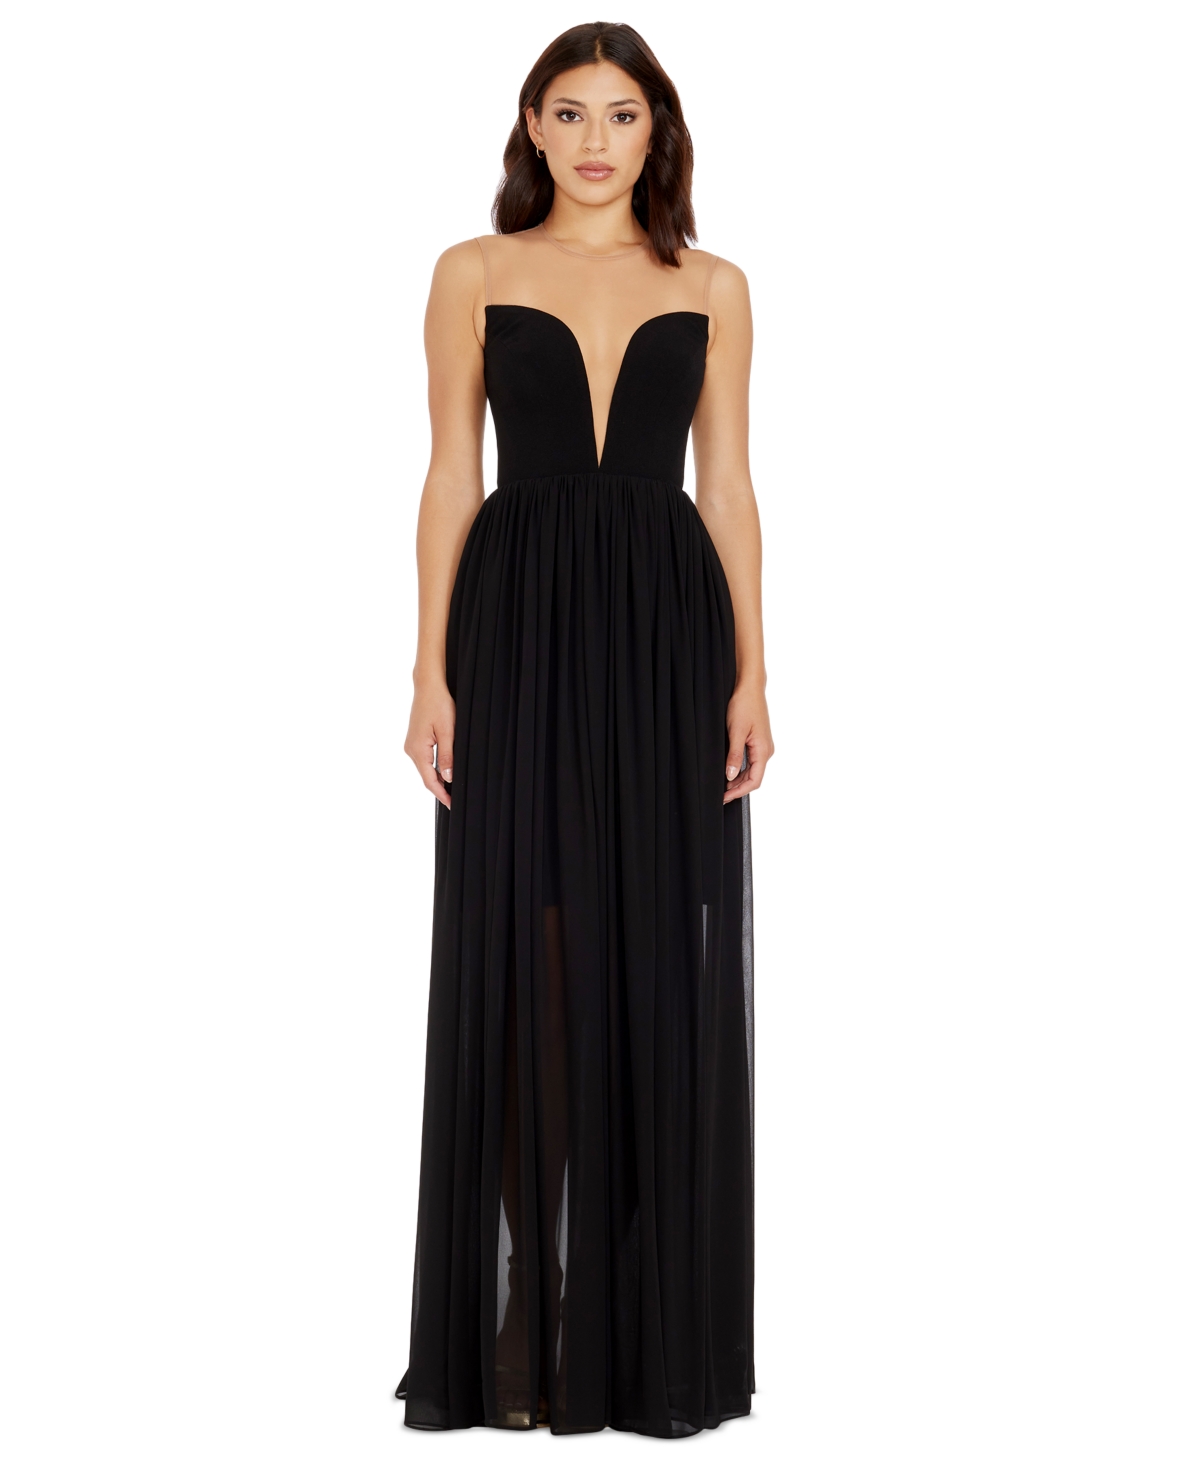 Women's Eleanor Strapless Gown - Black